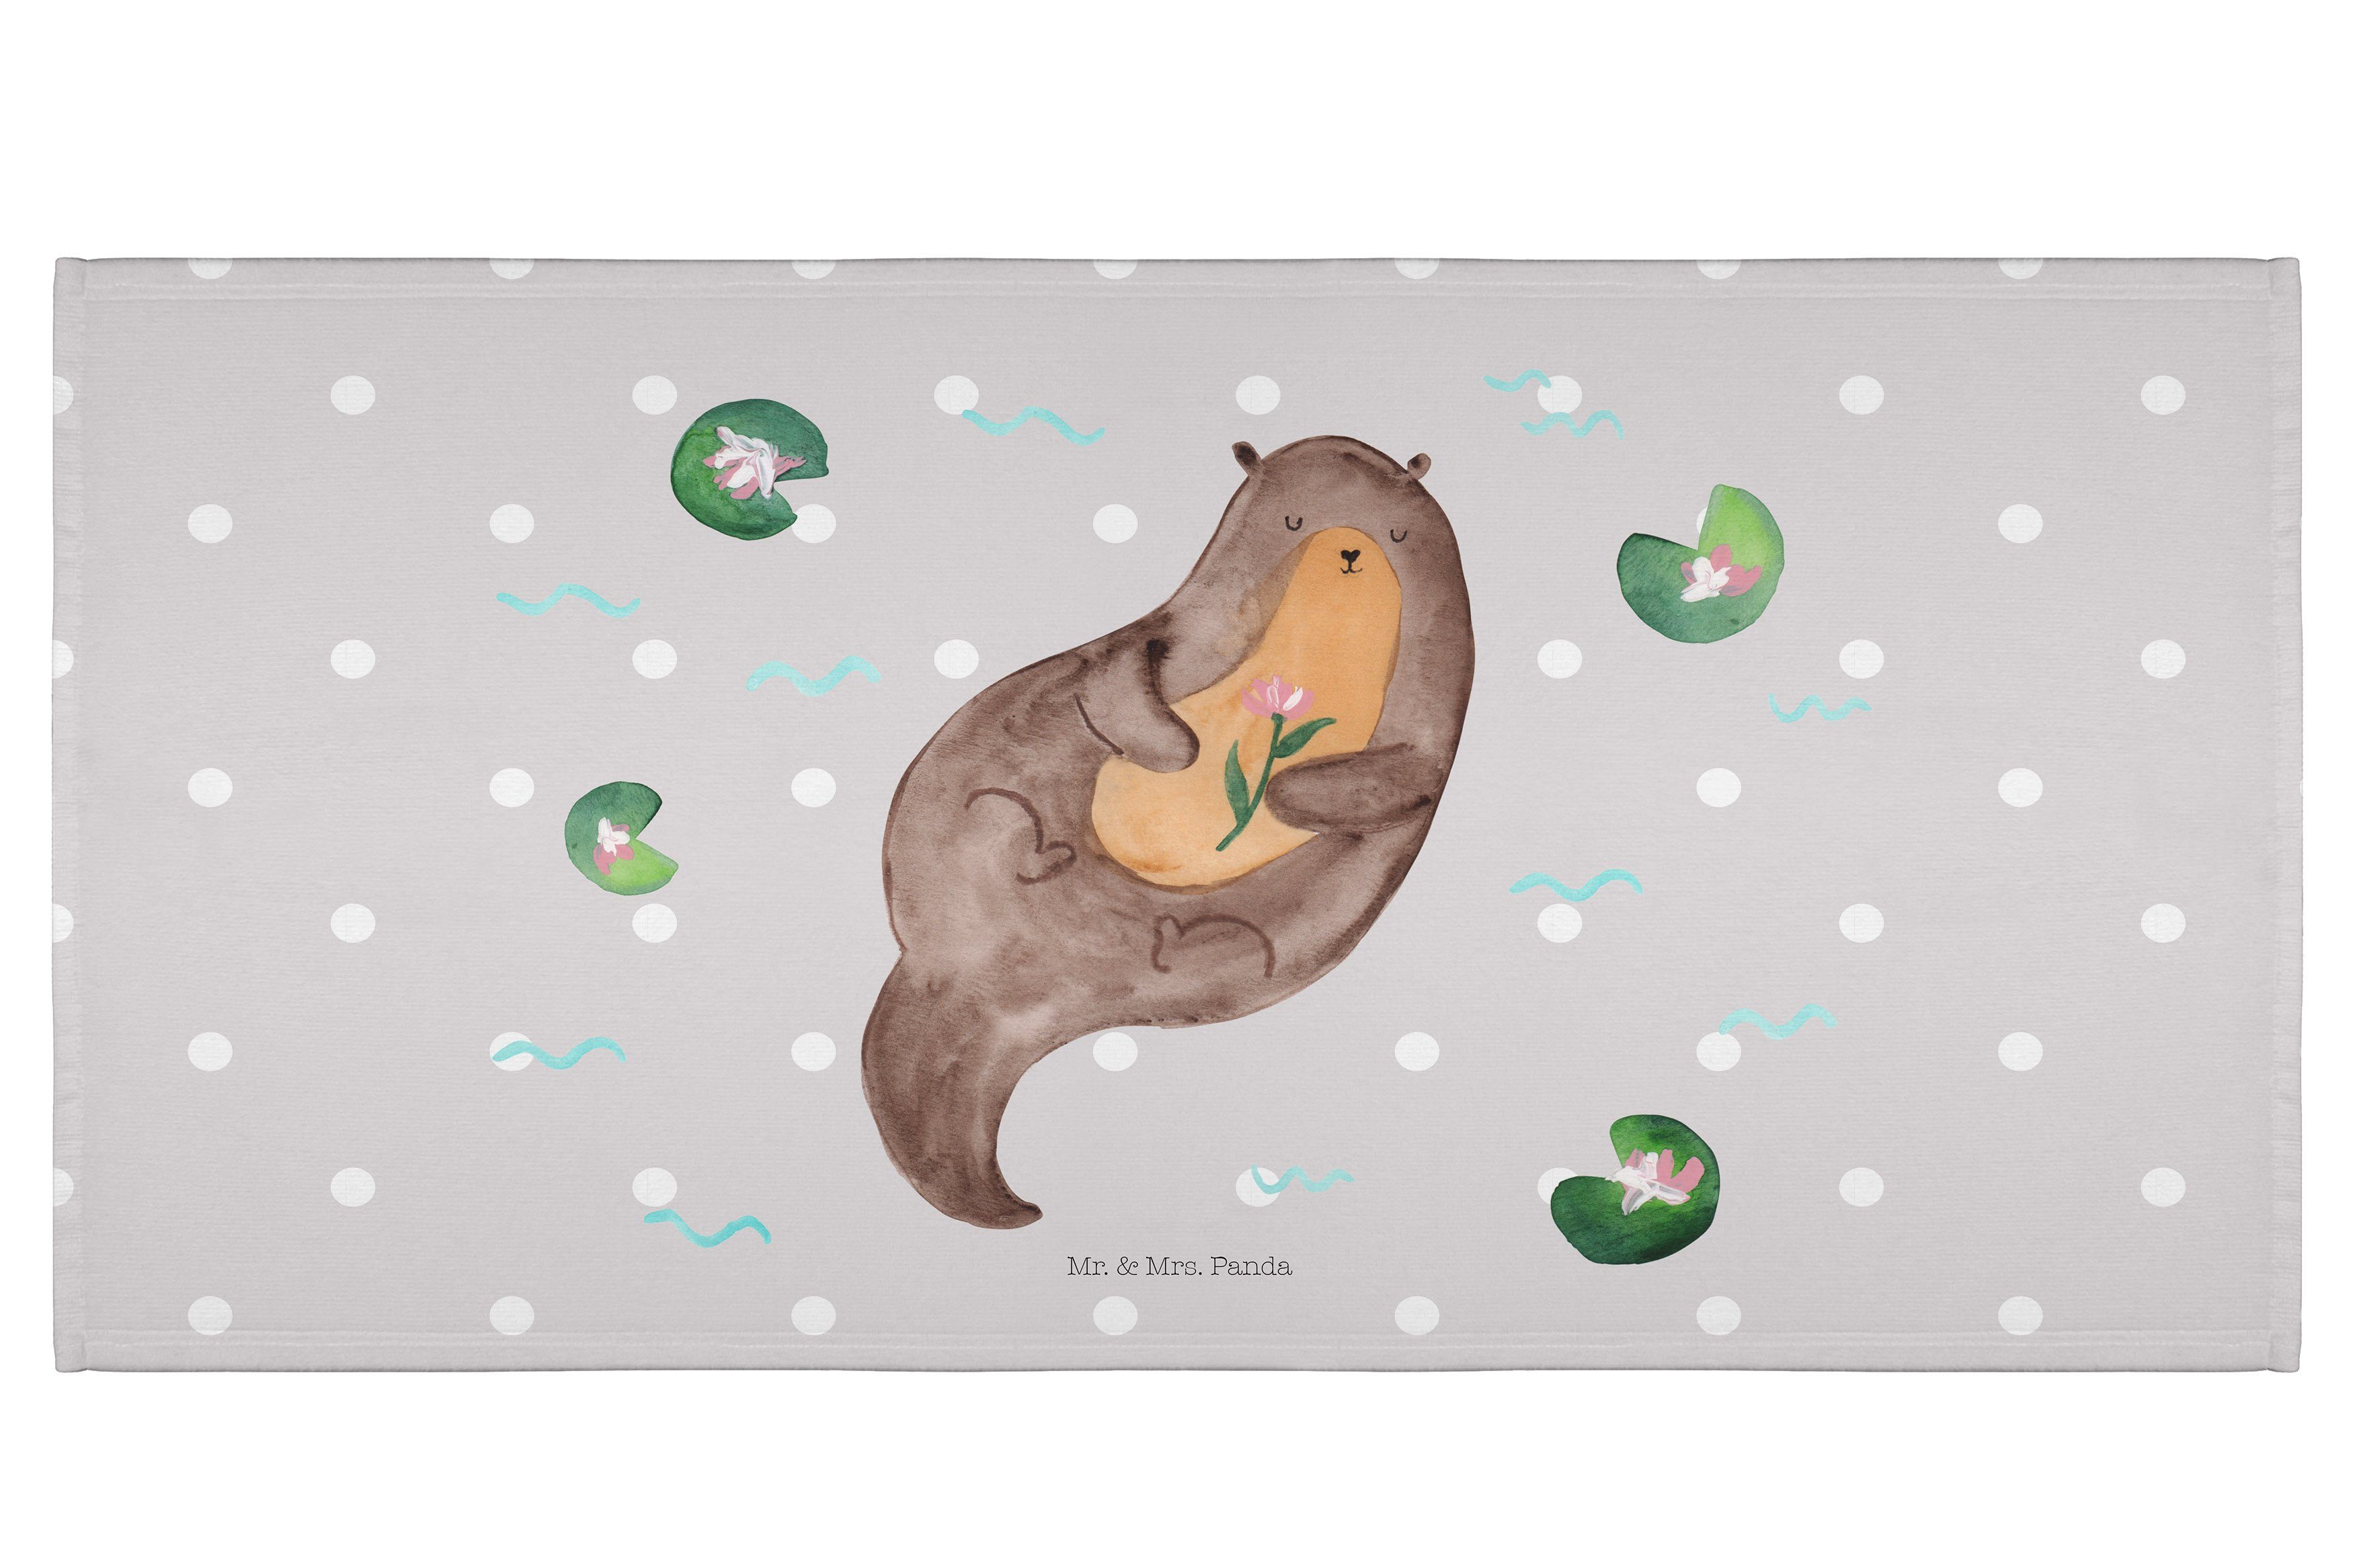 Mr. & Mrs. Panda Handtuch Otter mit Seerose - Grau Pastell - Geschenk, groß, Fischotter, Badezi, (1-St) | Alle Handtücher